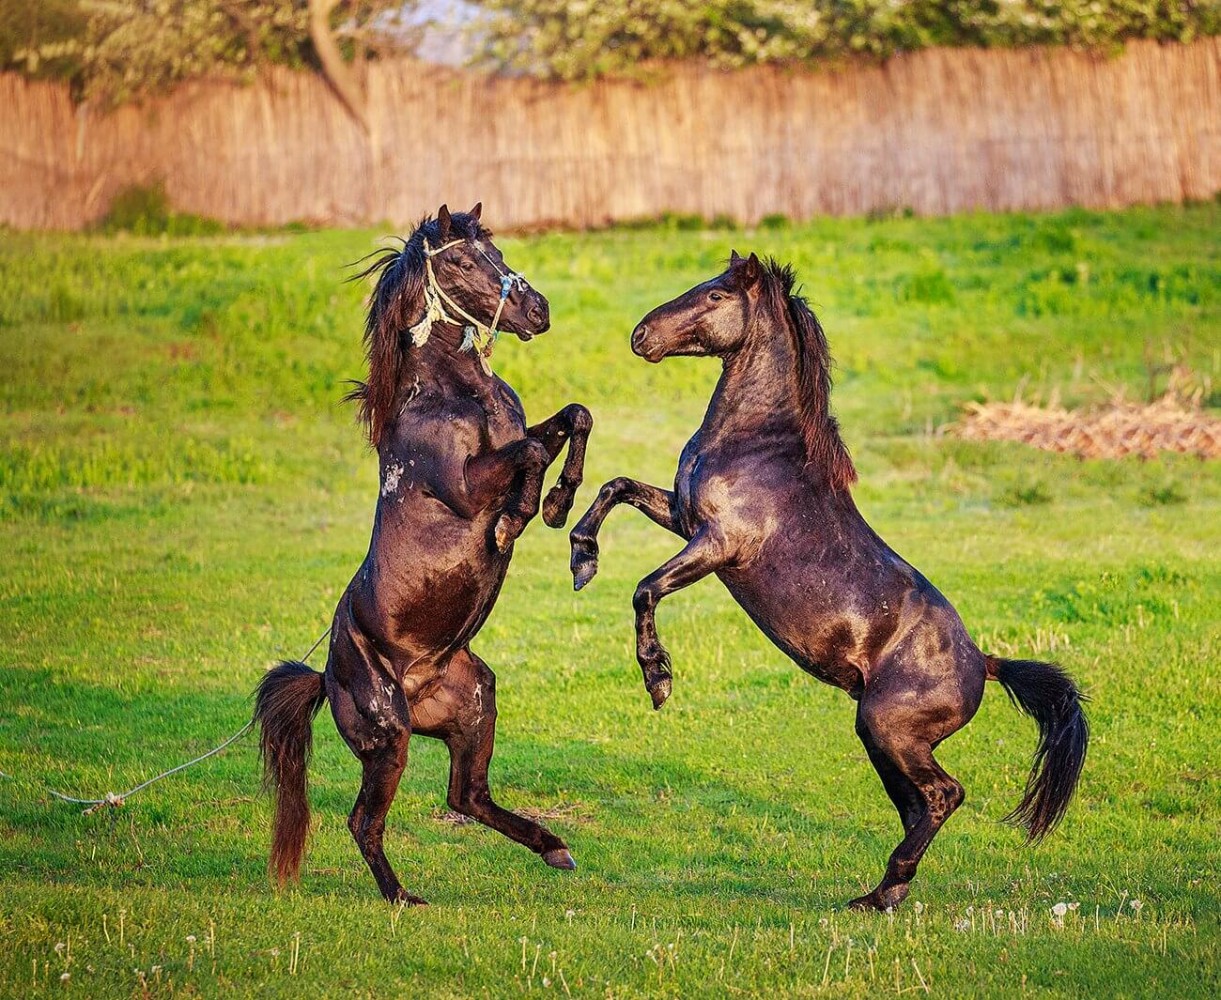 Delta Dunării - cal domestic și cal sălbatic